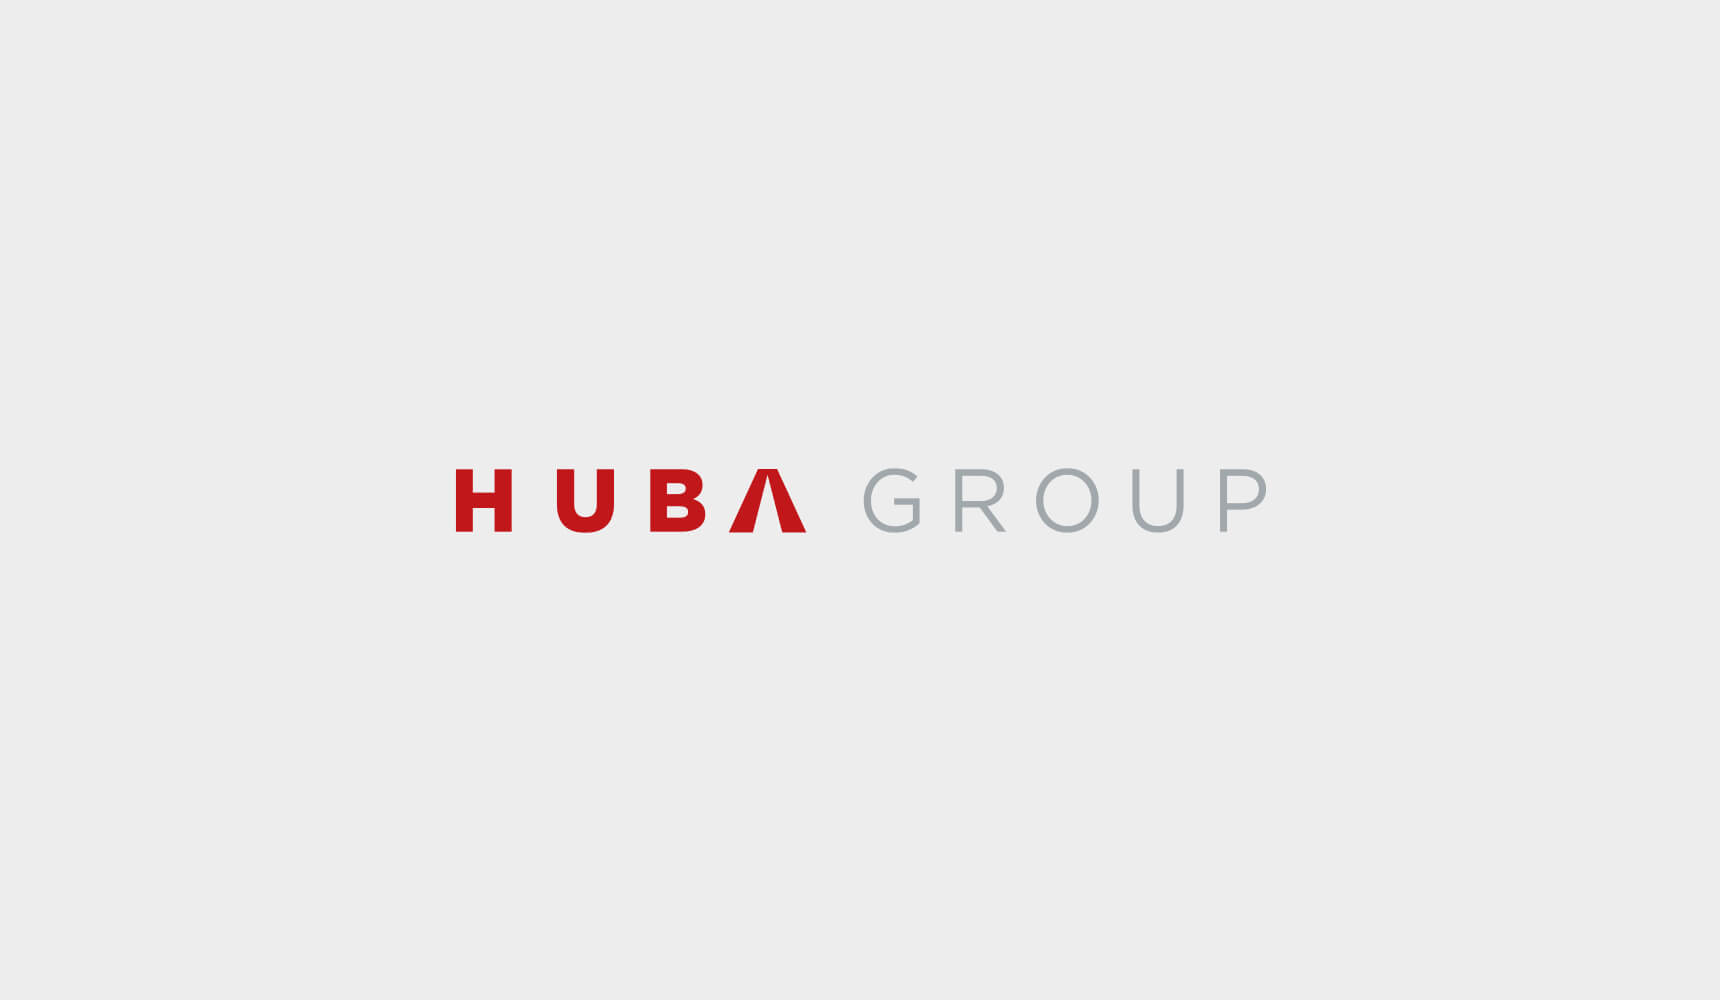 Huba-2 - wrinting 1-3 - video 1-5 - icon part-6 - hub-7 - icon writing-8 - logo